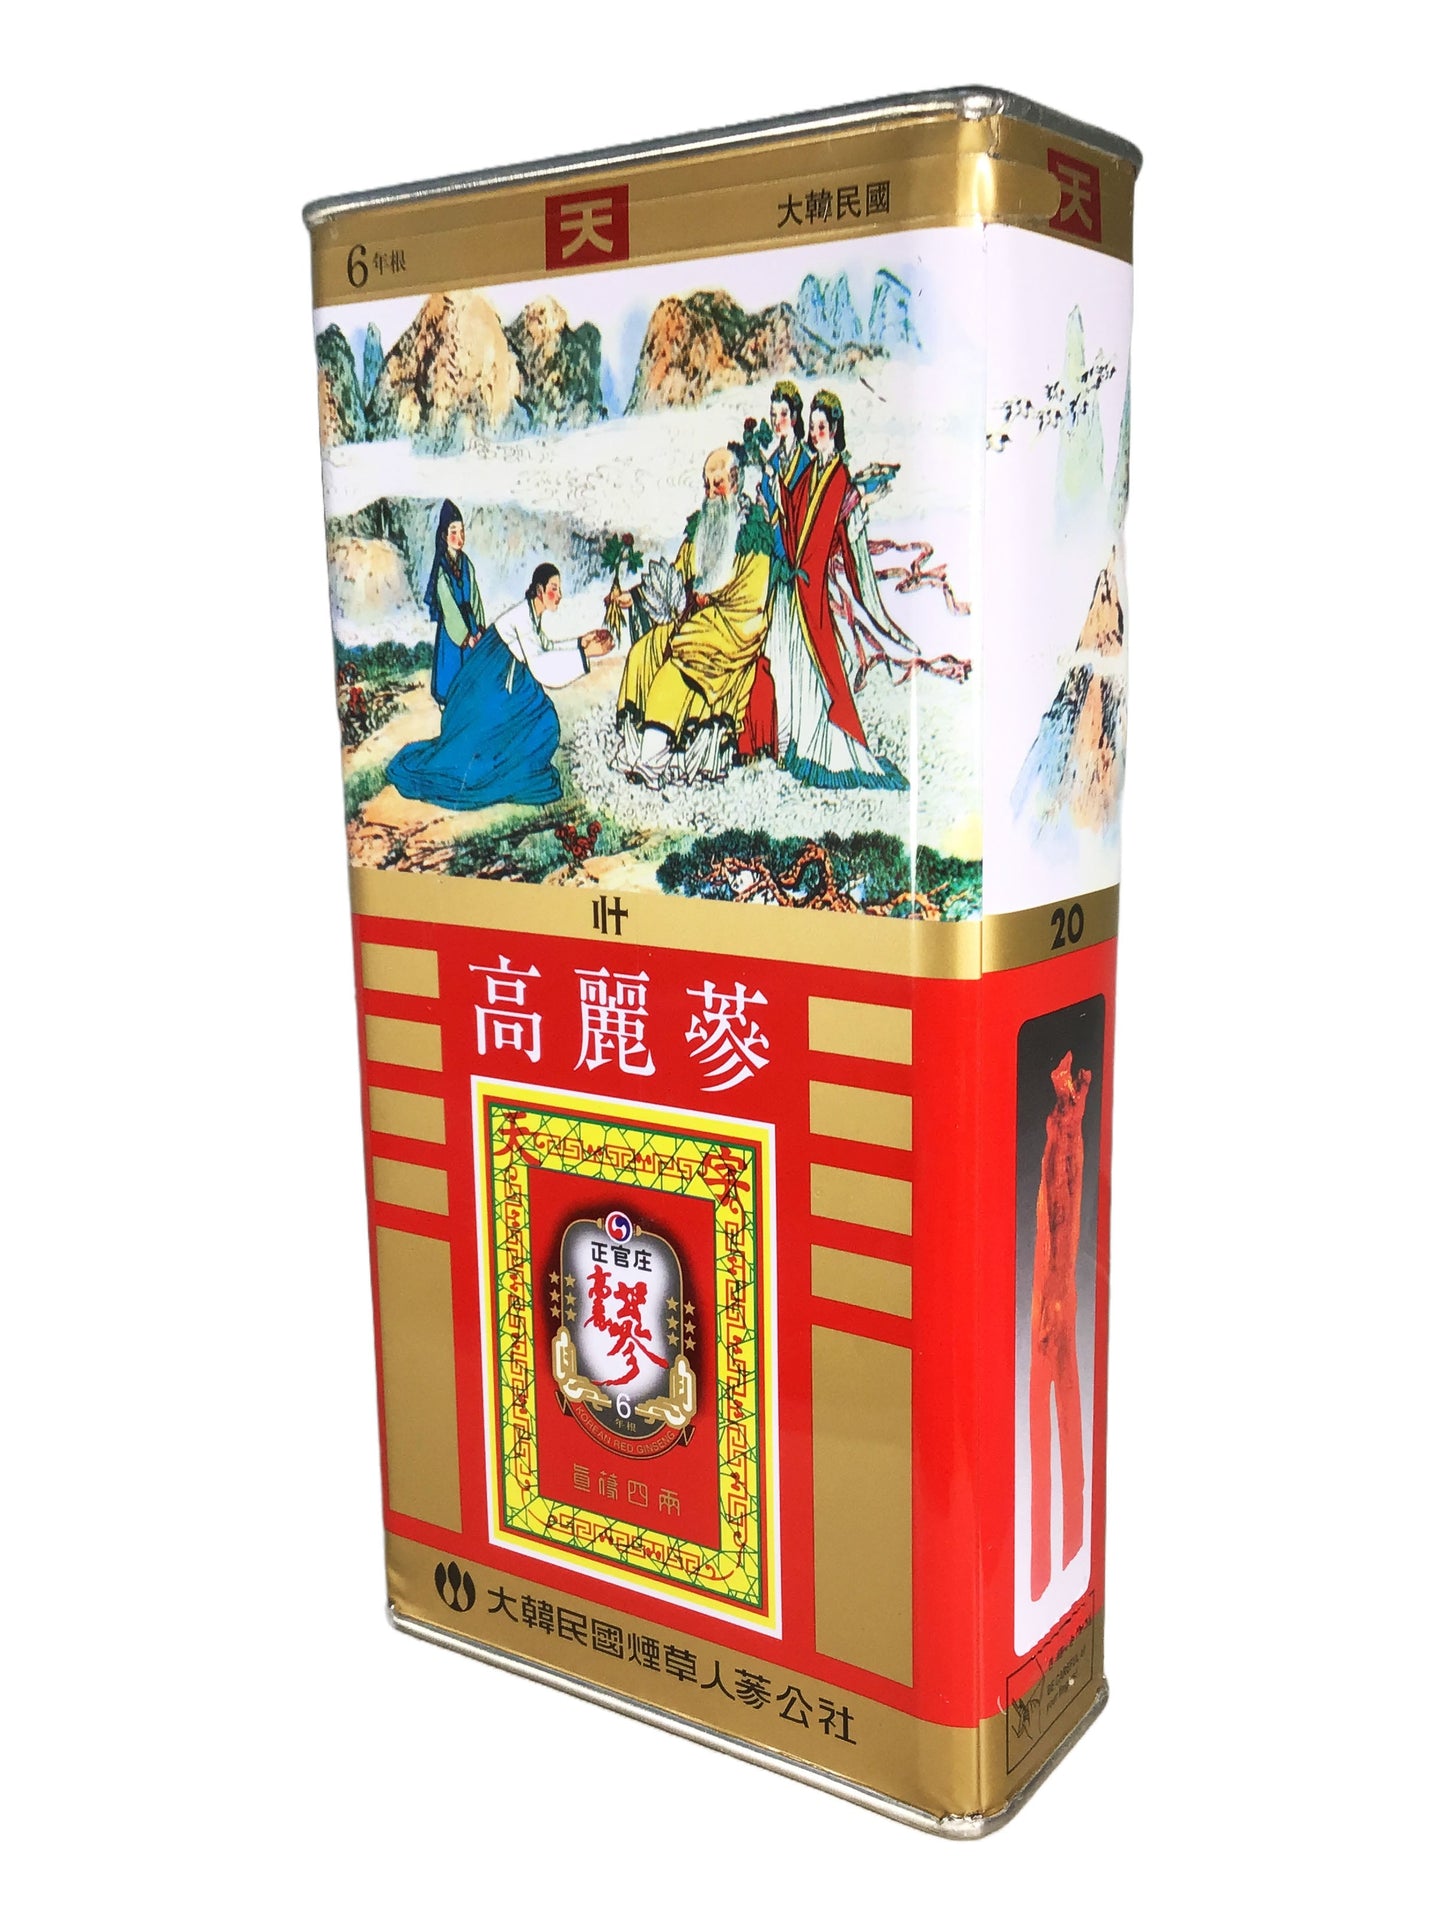 CHEONG KWAN JANG 6yr Old Korean Red Ginseng (Heaven-20) Canned 150g 正官庄 高丽参 (天-20)